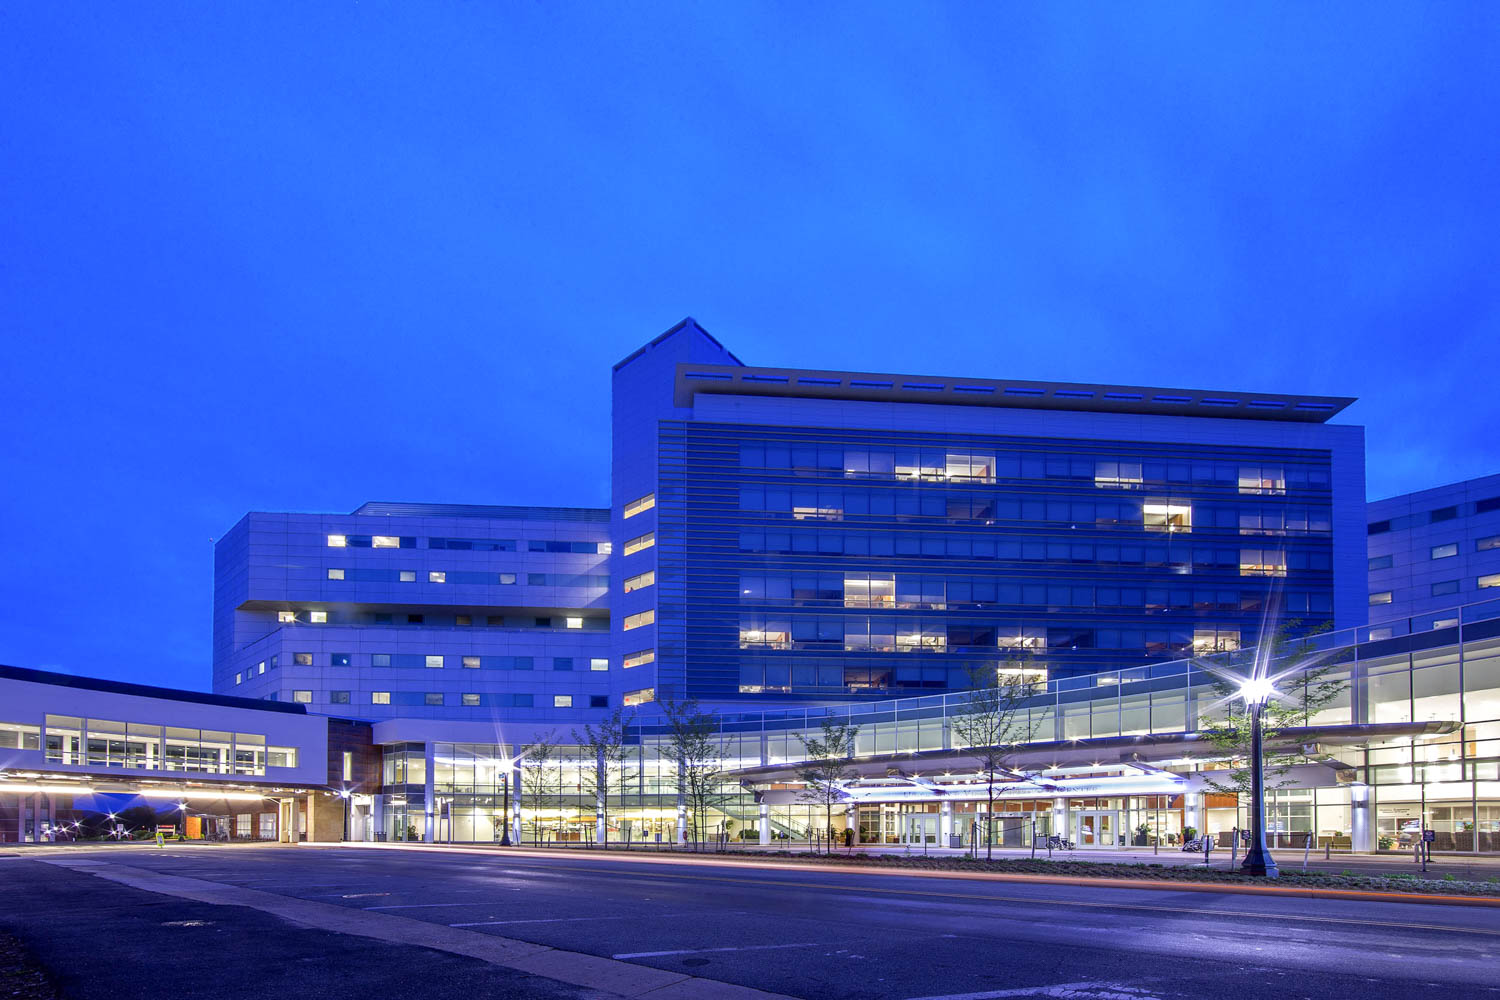 UVA hospital at dusk with lights on